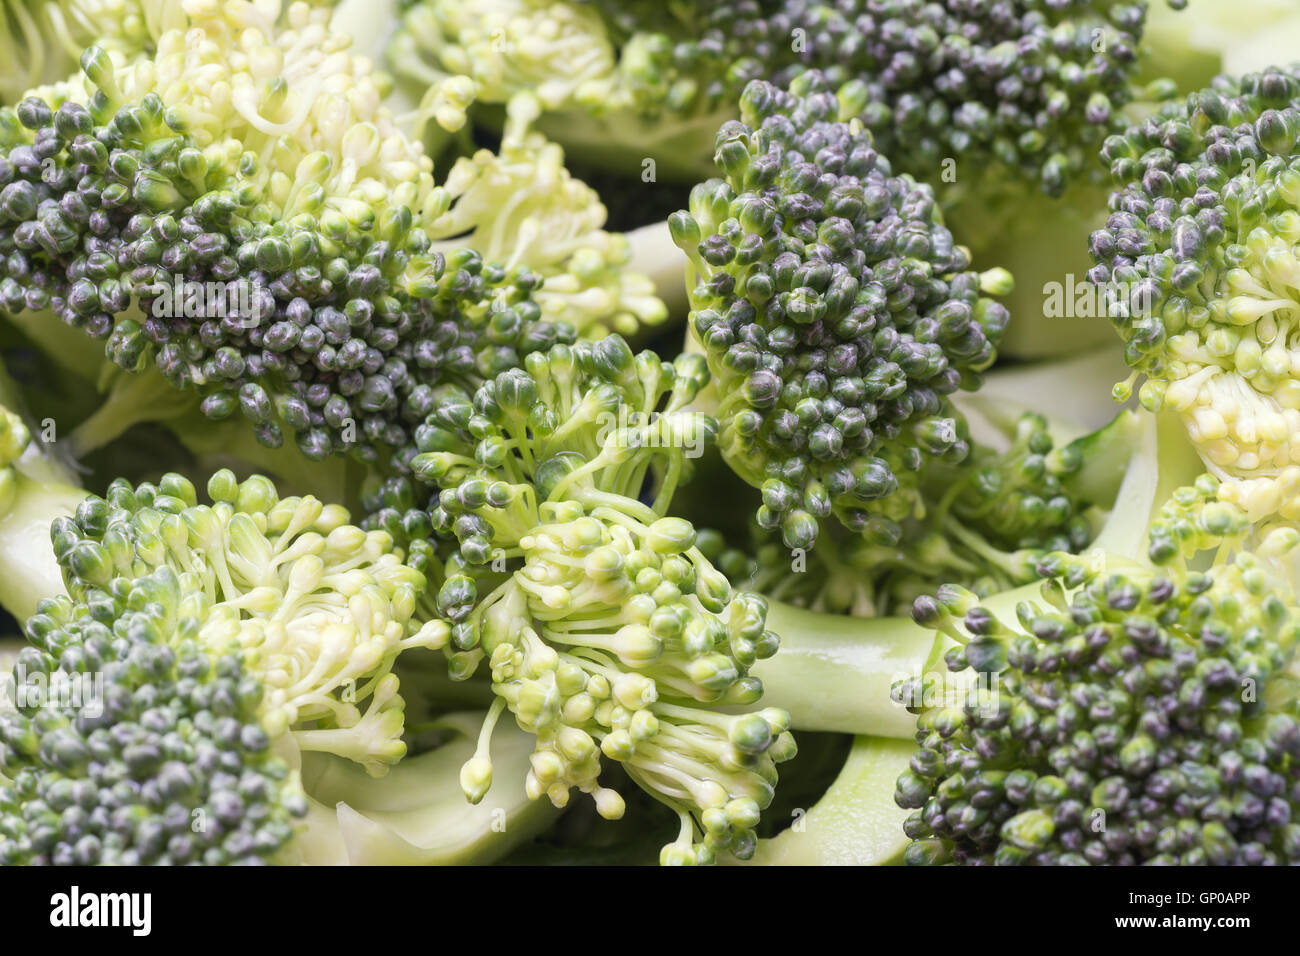 Close up green broccoli sliced. Stock Photo